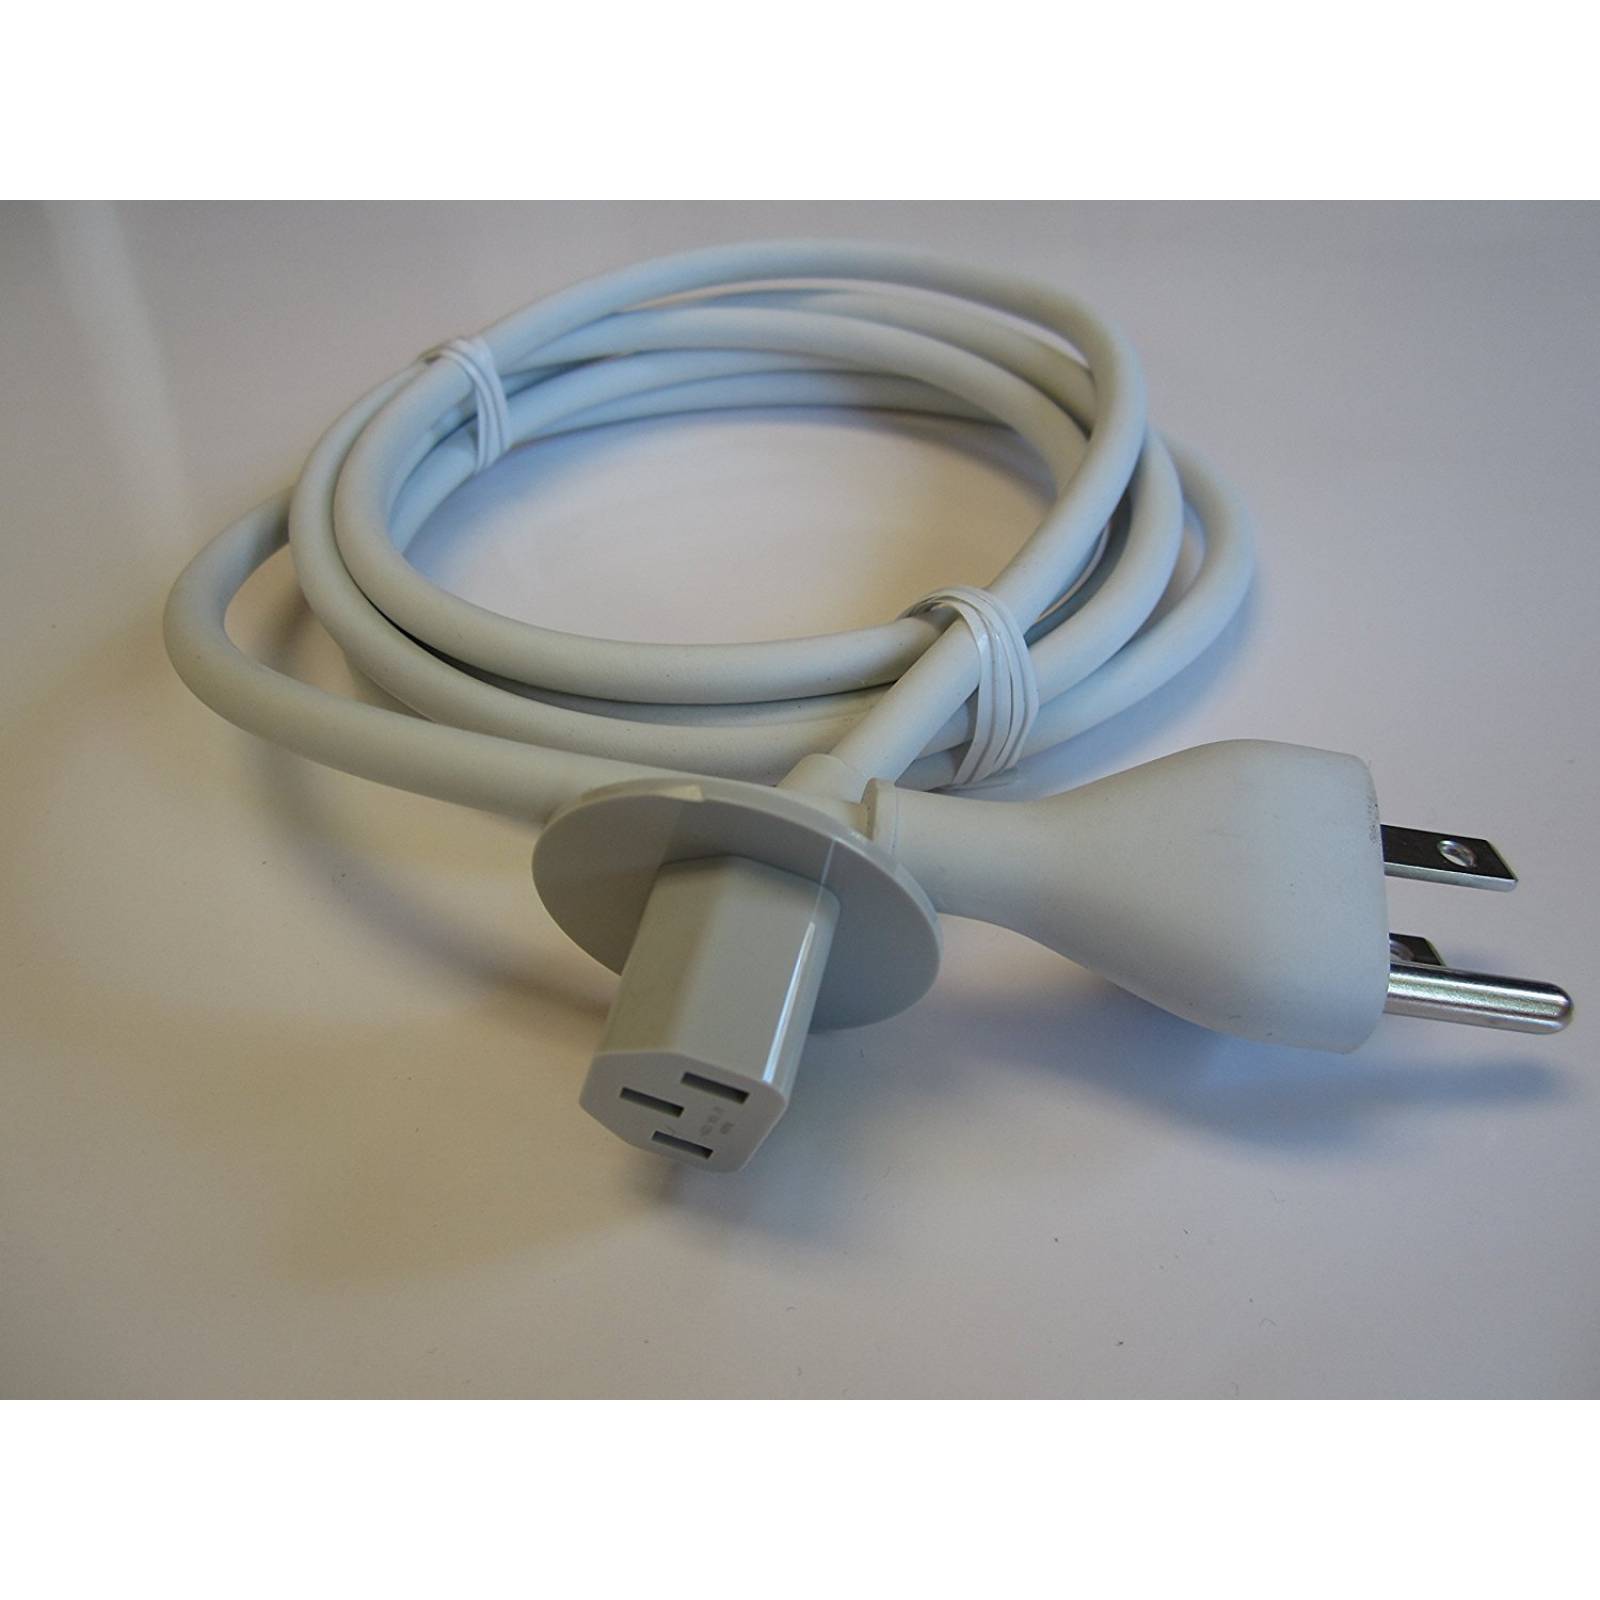 B:Apple iMac Intel Power cable 923-0285 Late 2012 2015 tardío